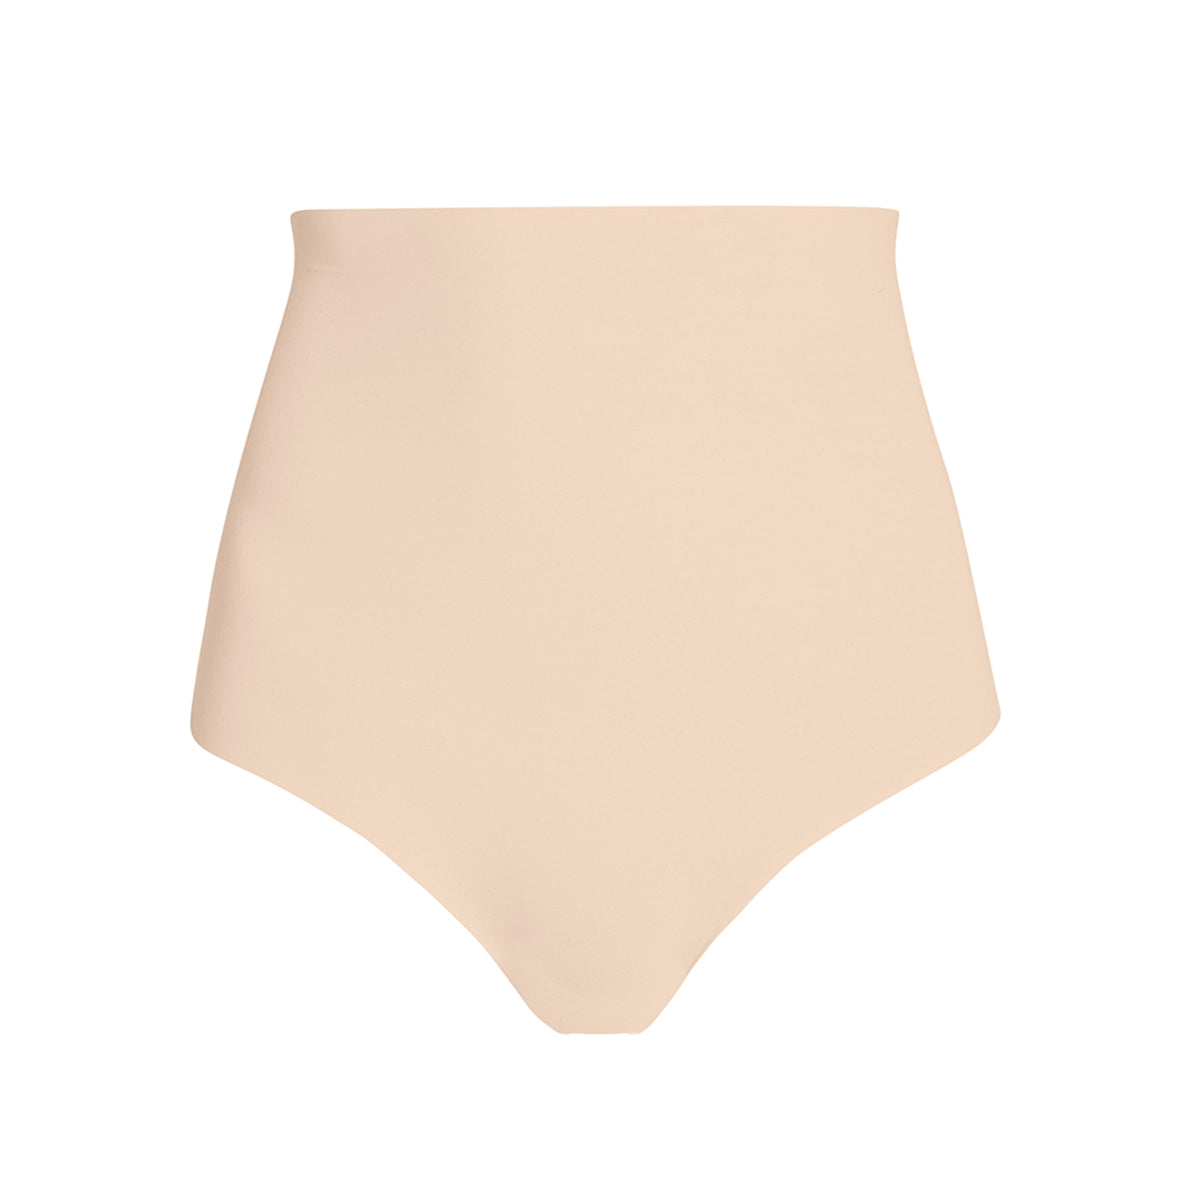 Commando true nude thong control shapewear slimming seamless underwear lingerie canada linea intima toronto